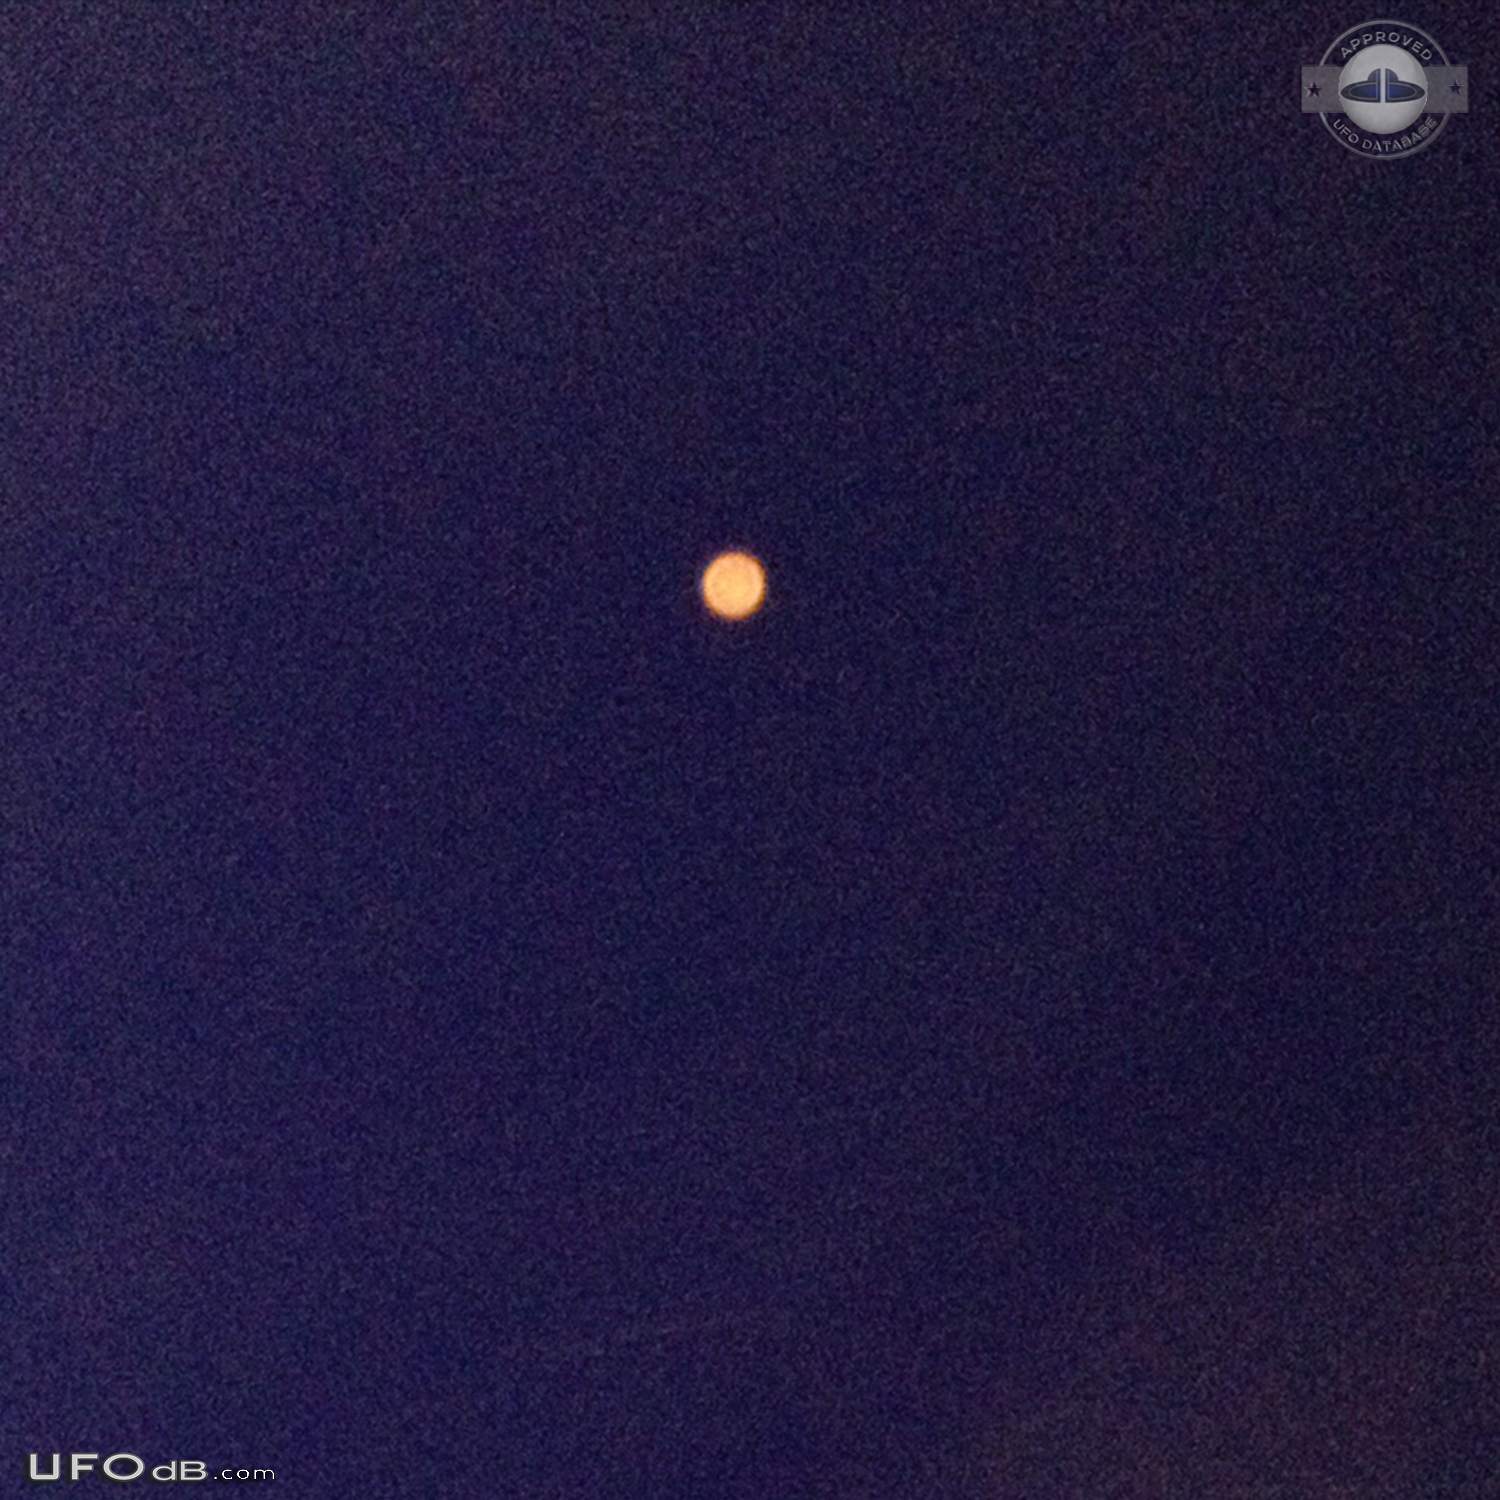 Orange orb UFO transparent edge ring - Huntington Beach California USA UFO Picture #783-3